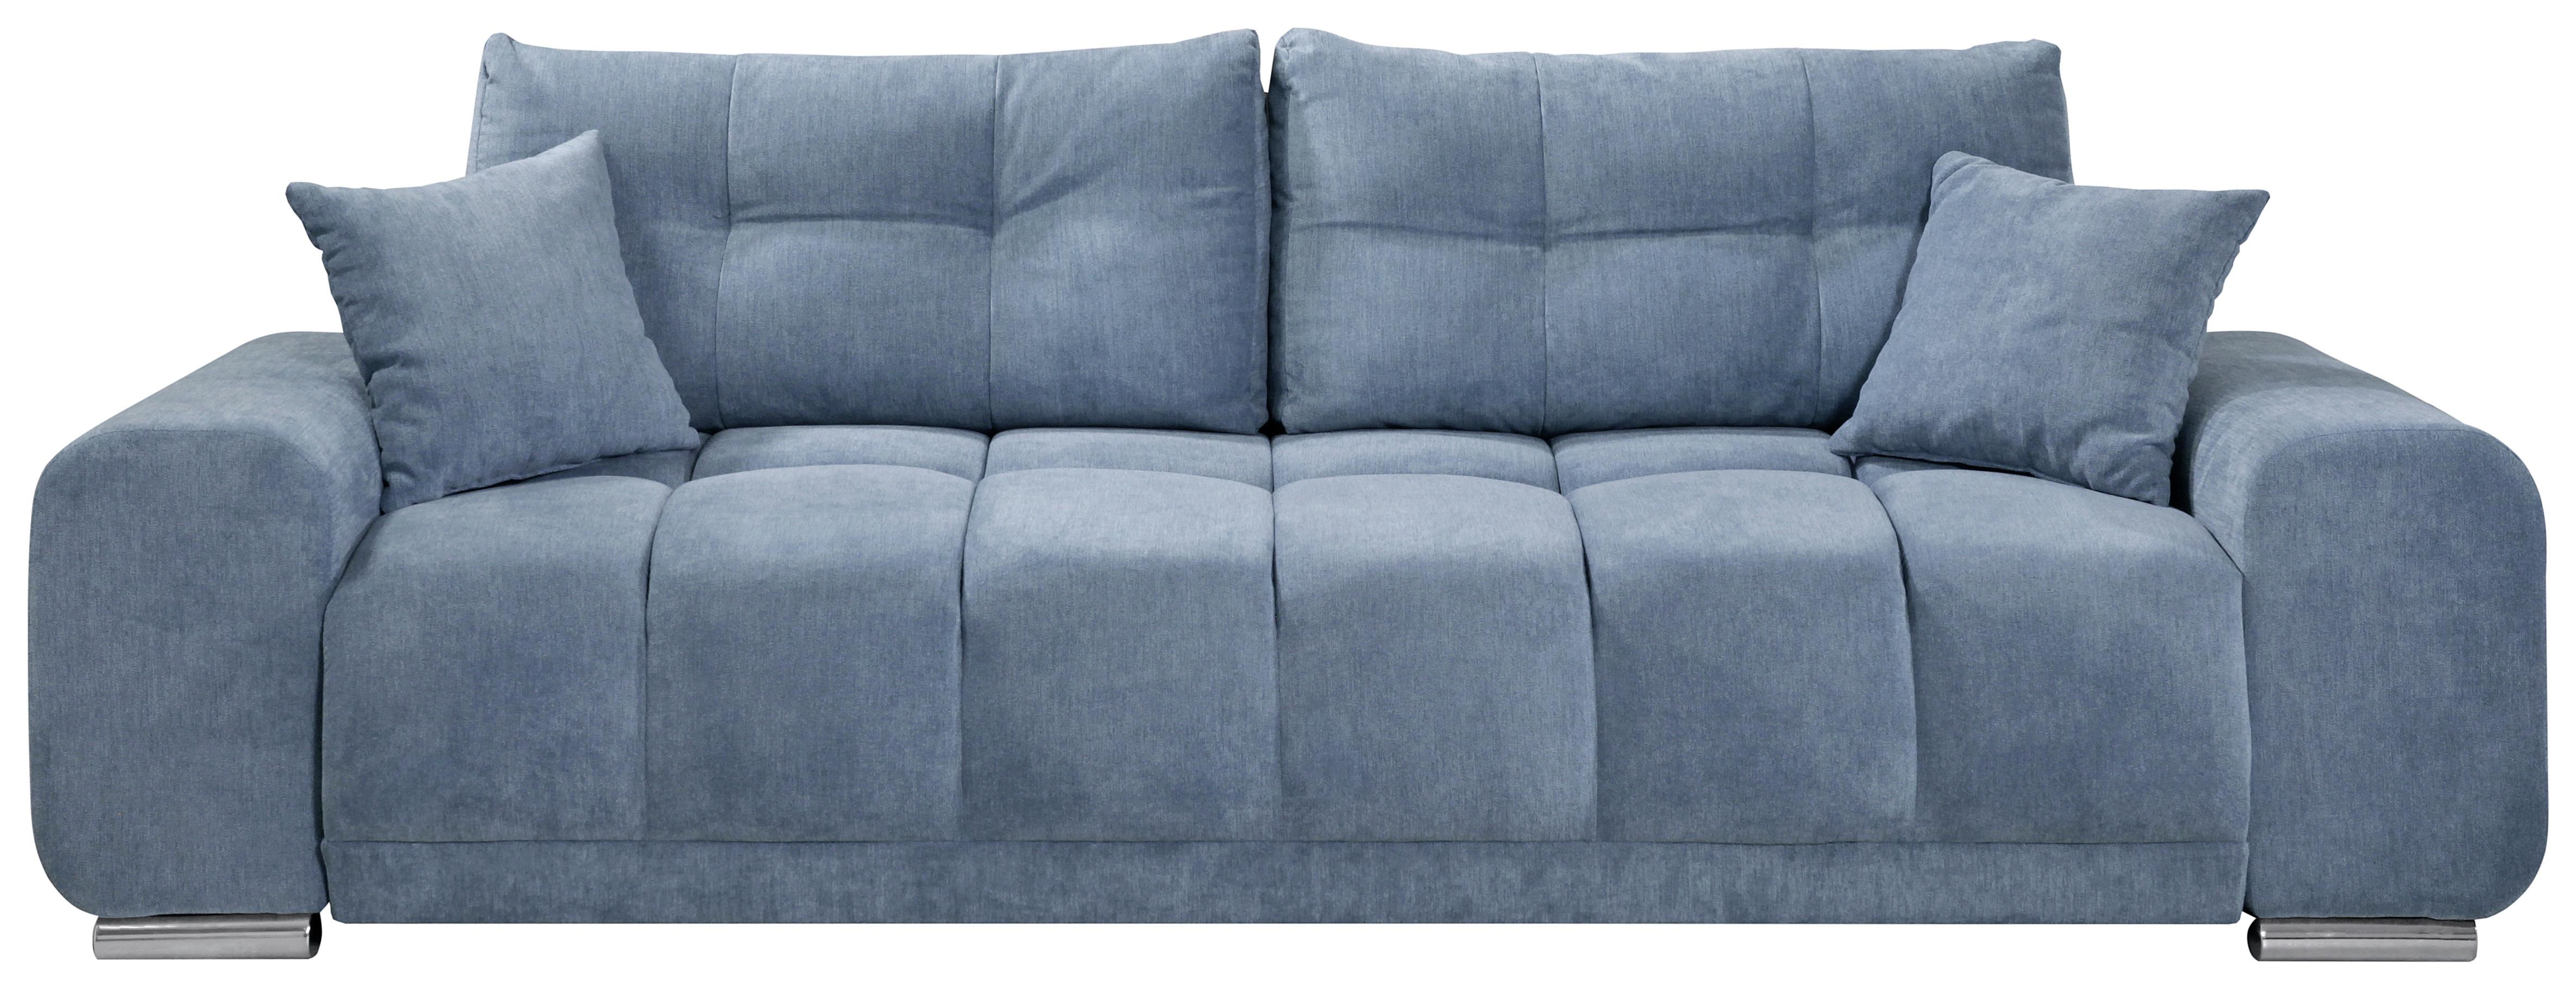 Dreisitzer-Sofa Paco - Blau/Silberfarben, MODERN, Holzwerkstoff/Textil (260/95/90cm) - MID.YOU